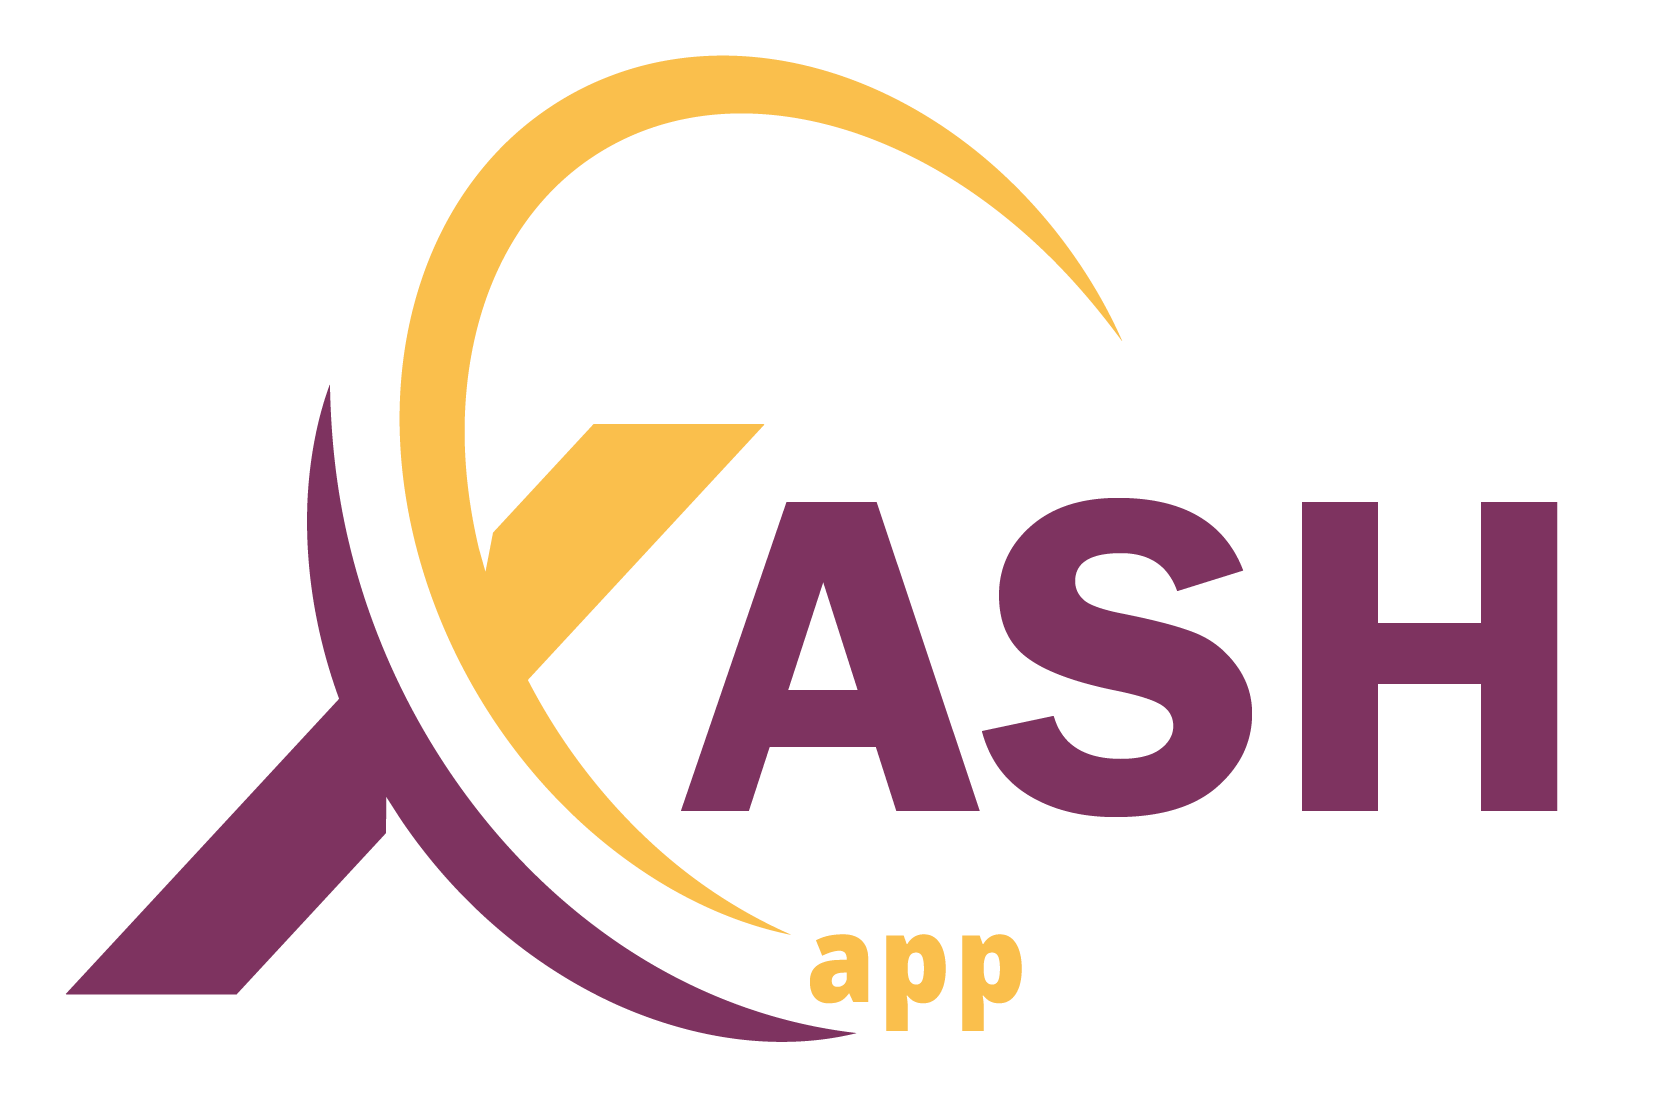 XCash App